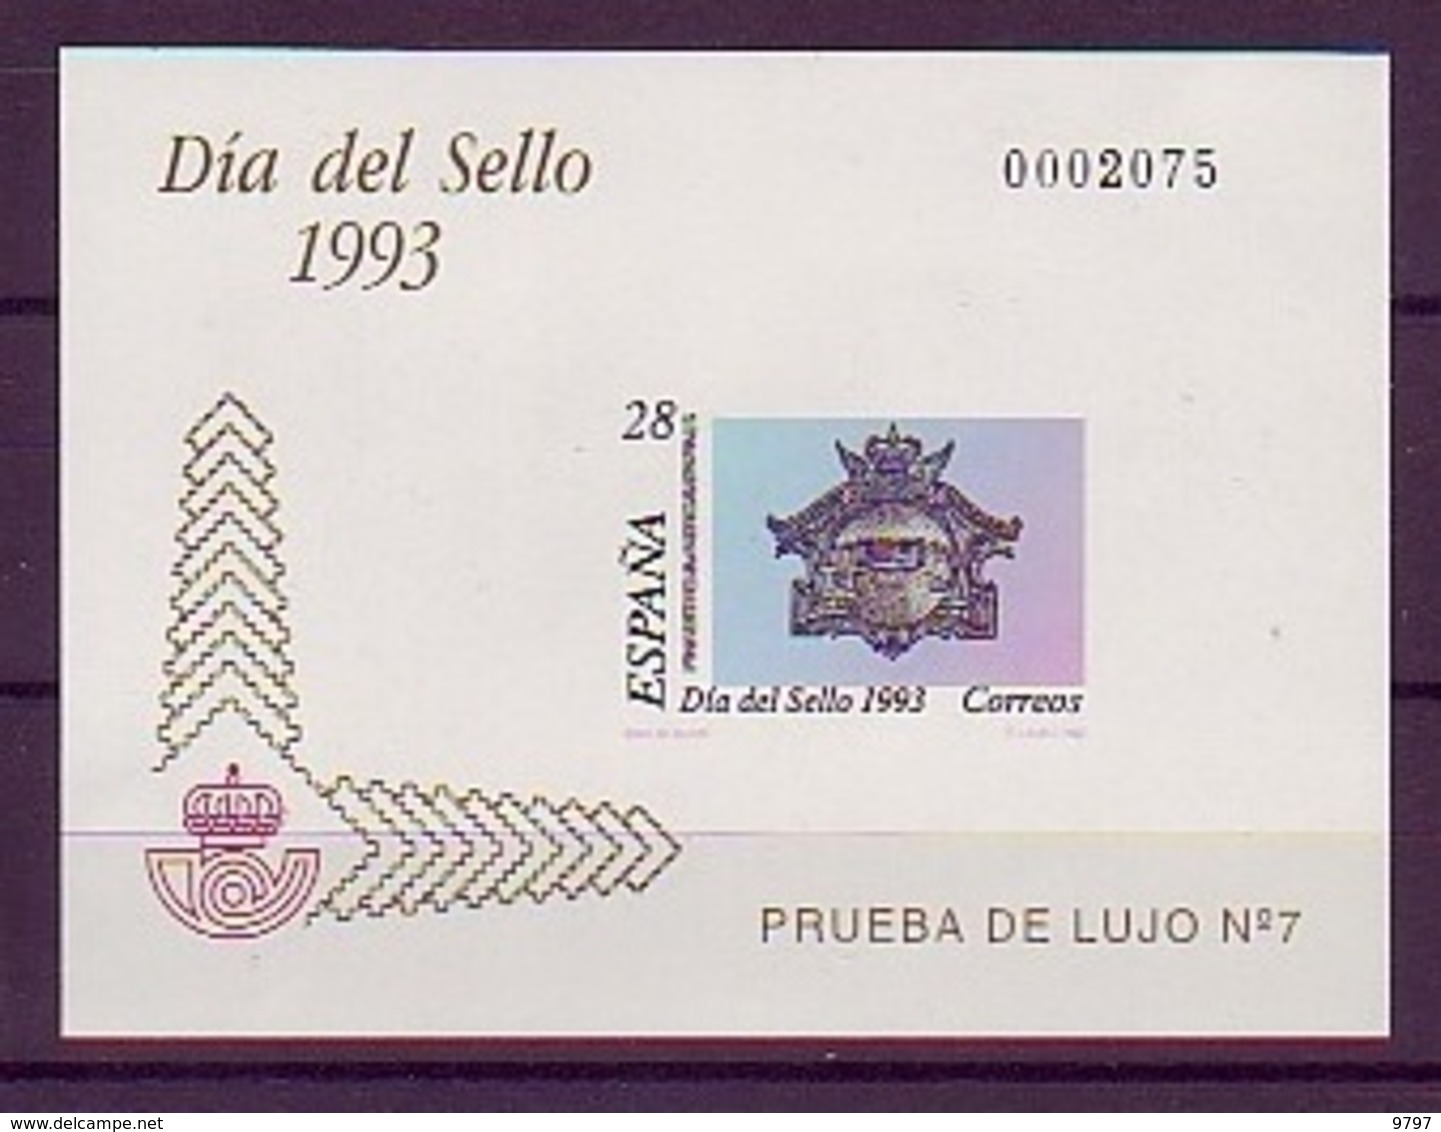 PRUEBA OFICIAL Nº 28 (EDIFIL) DIA DEL SELLO 1993- (Prueba De Lujo Nº 7) - OFERTA POR LIQUIDACION - Hojas Conmemorativas